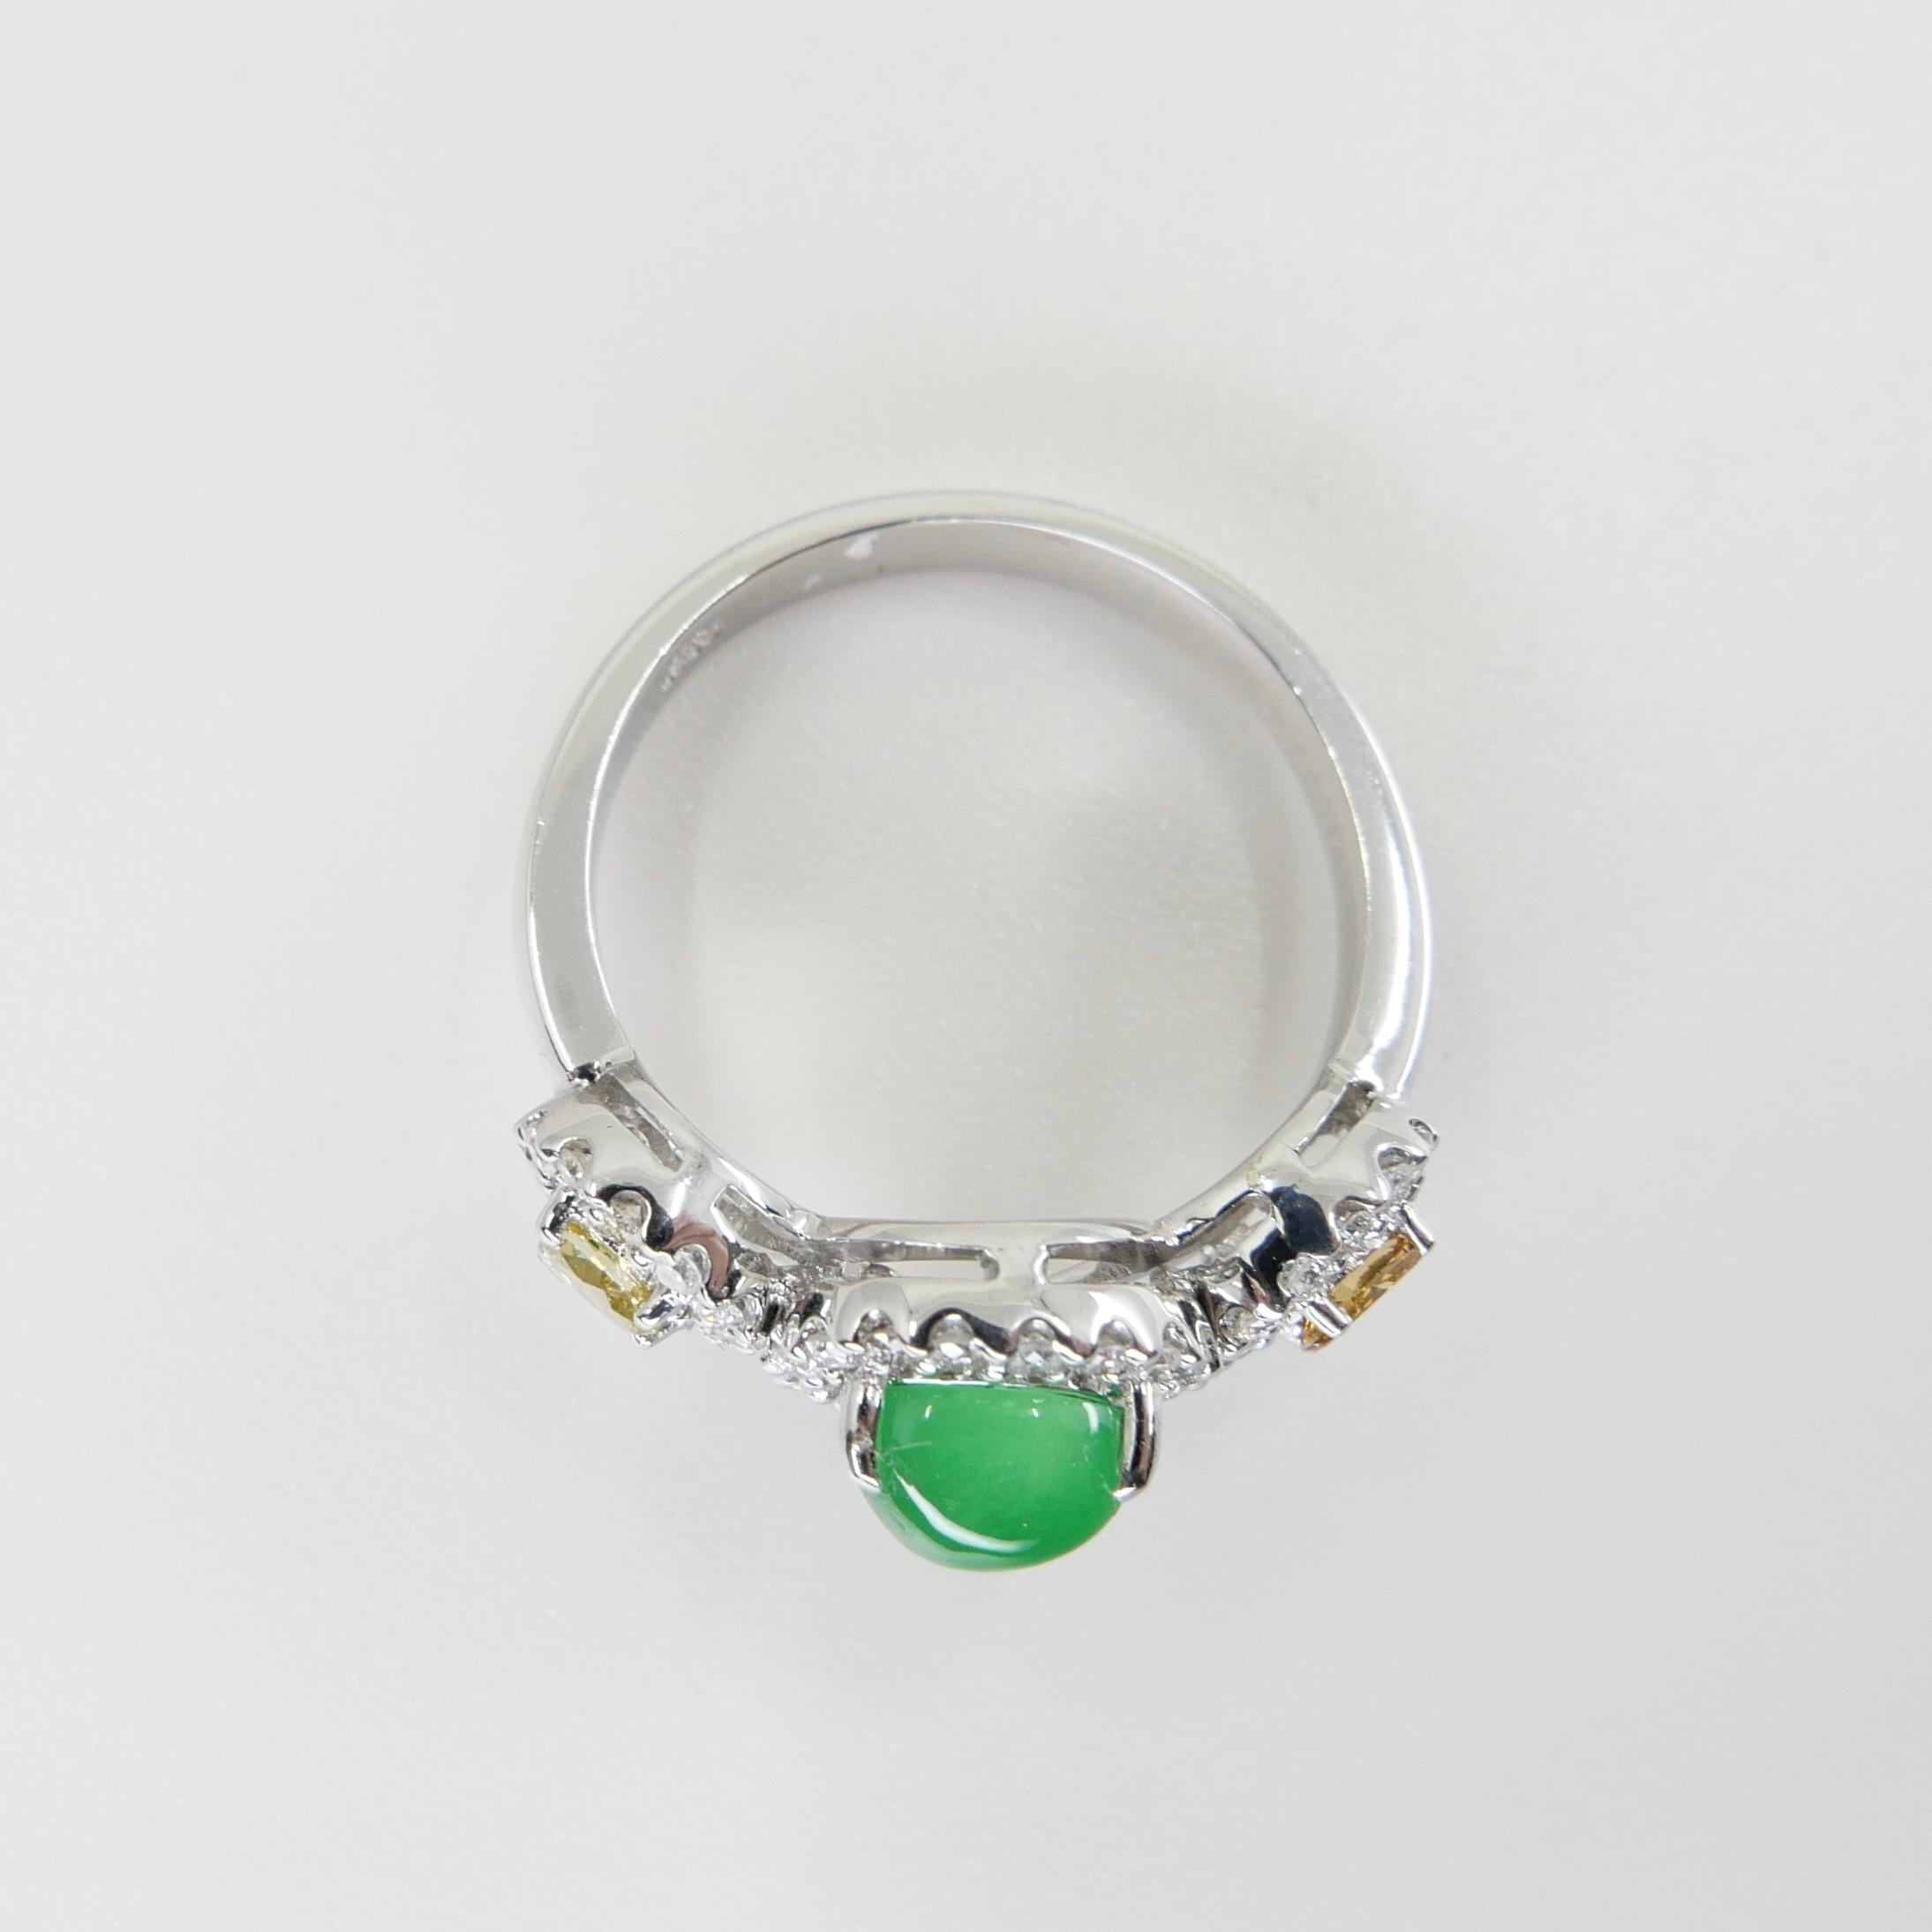 Certified Jade & Fancy Yellow Diamond Cocktail Ring, Glowing Apple Green Jade For Sale 12